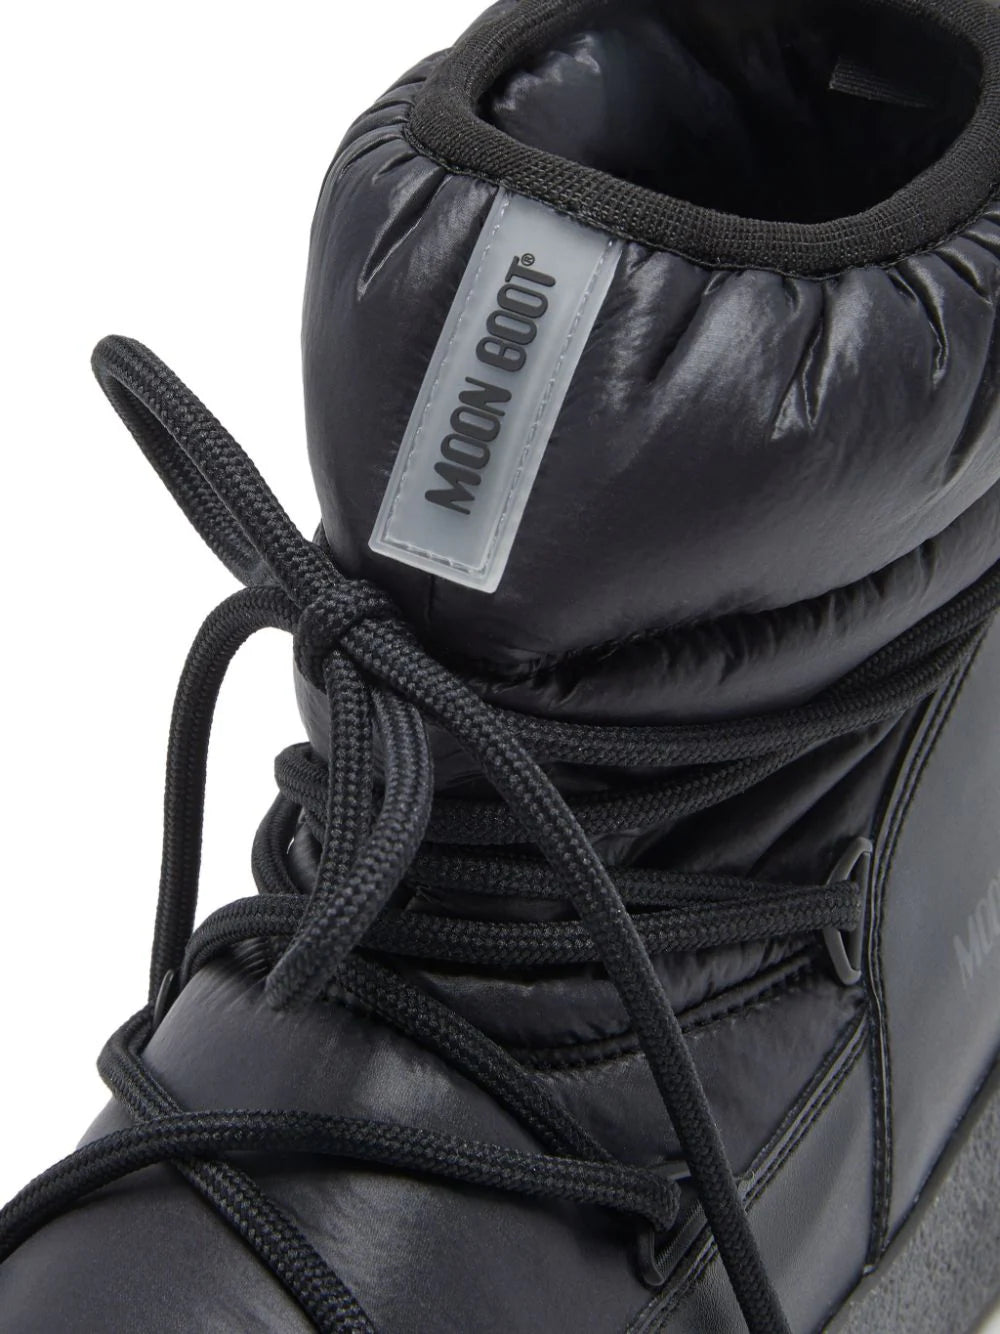 MOON BOOT UNISEX Icon Ltrack Low Nylon Ankle Boots Black - MAISONDEFASHION.COM